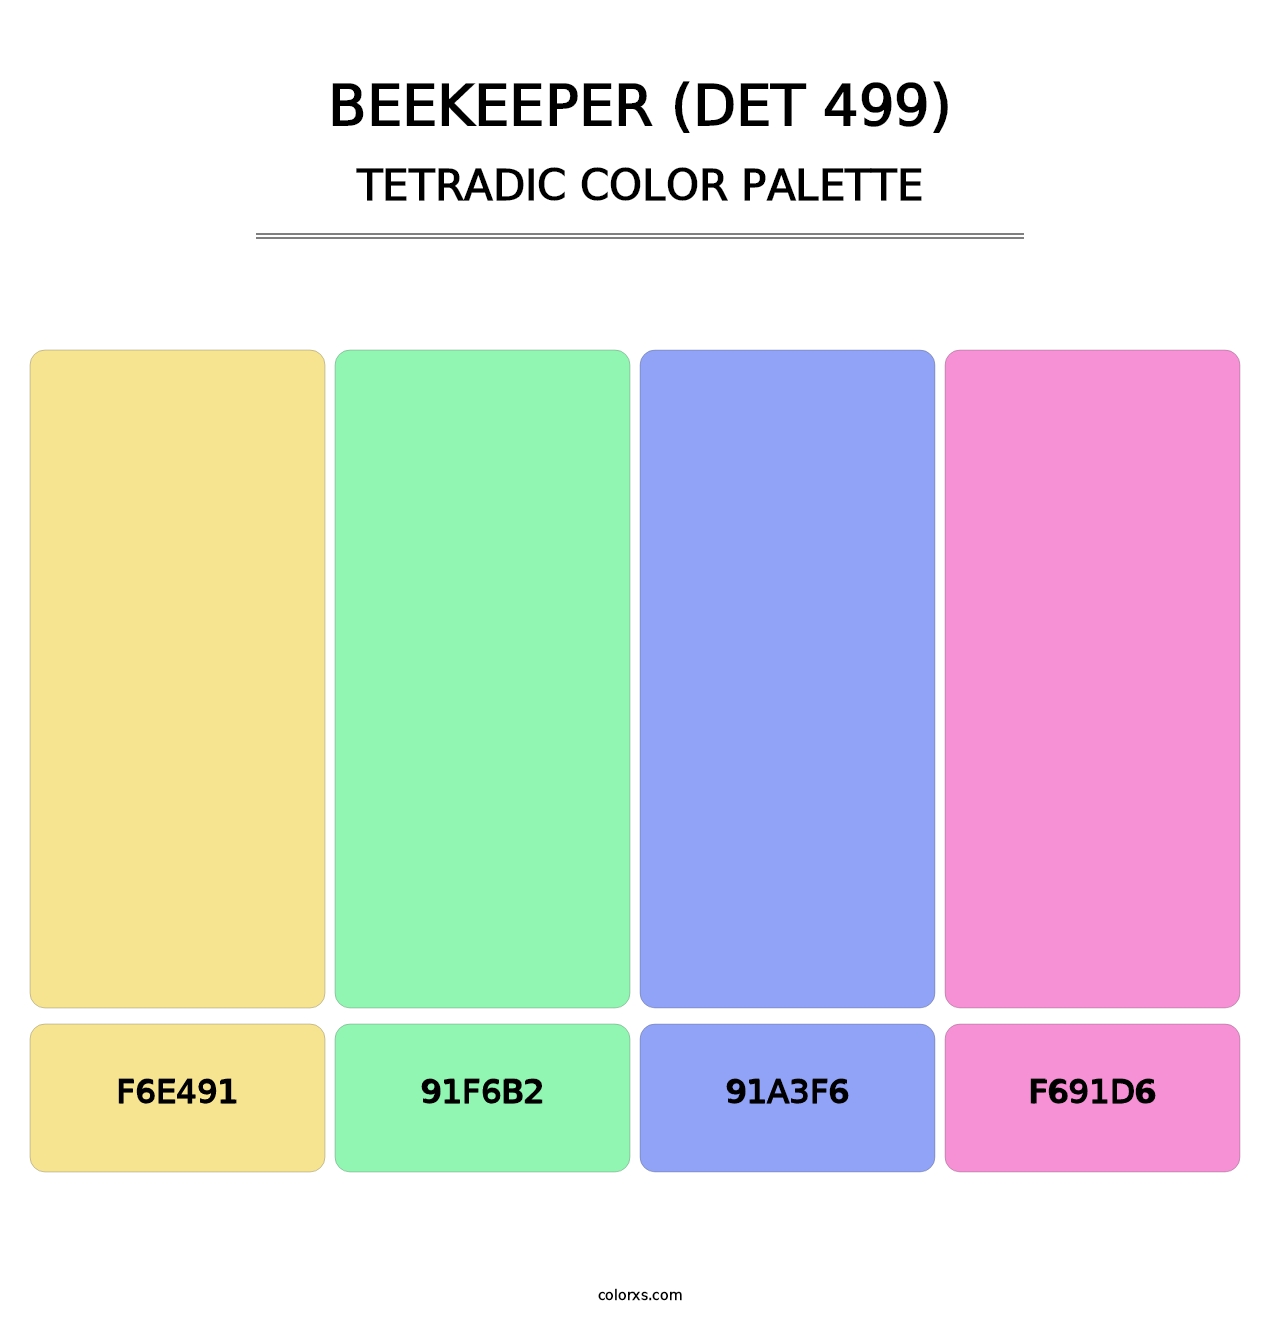 Beekeeper (DET 499) - Tetradic Color Palette